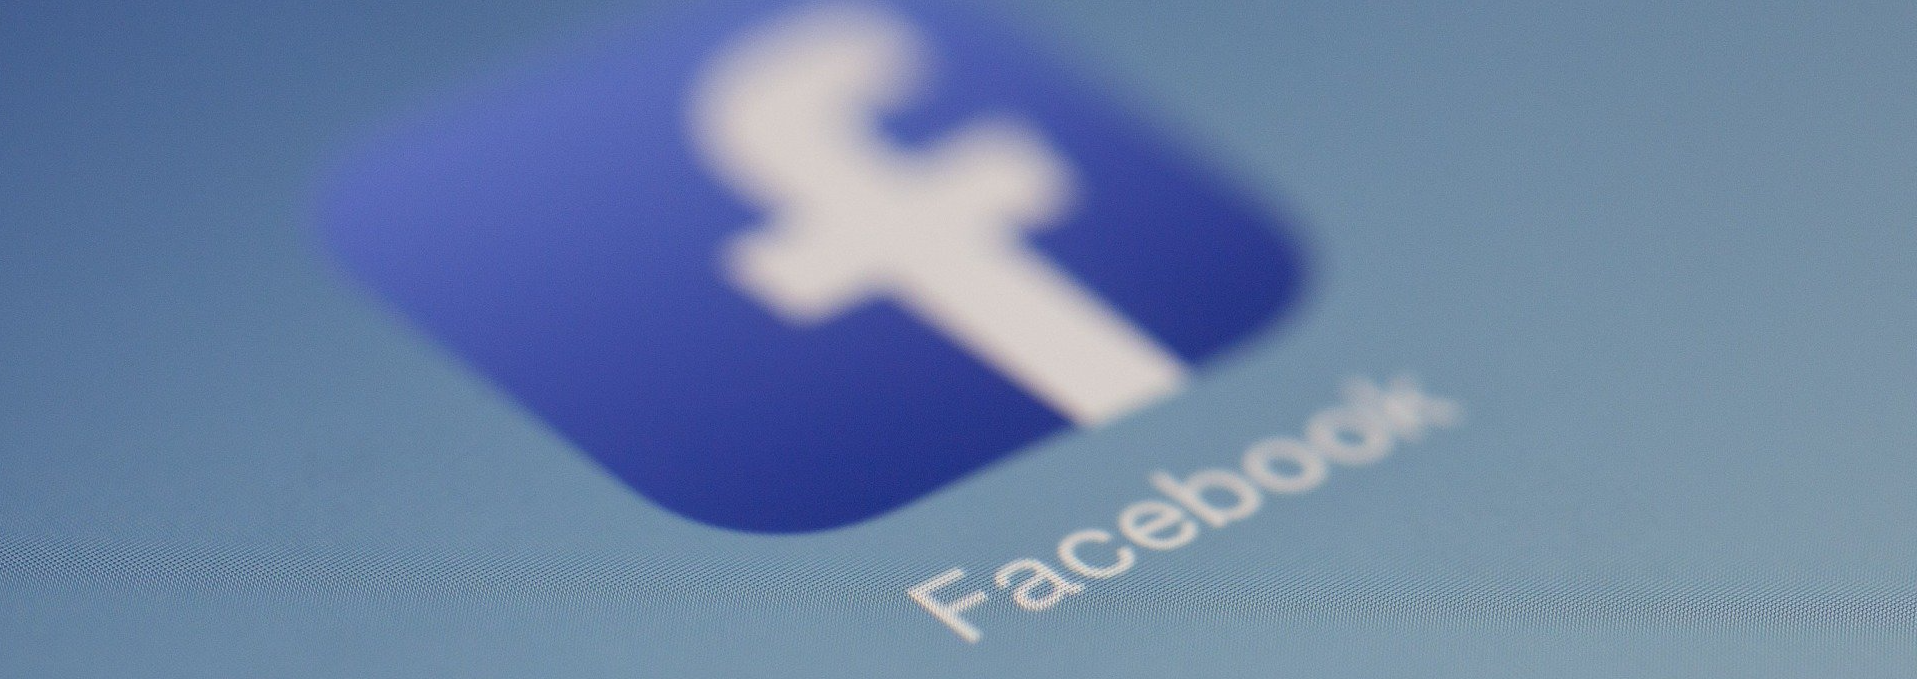 does facebook advertising work?